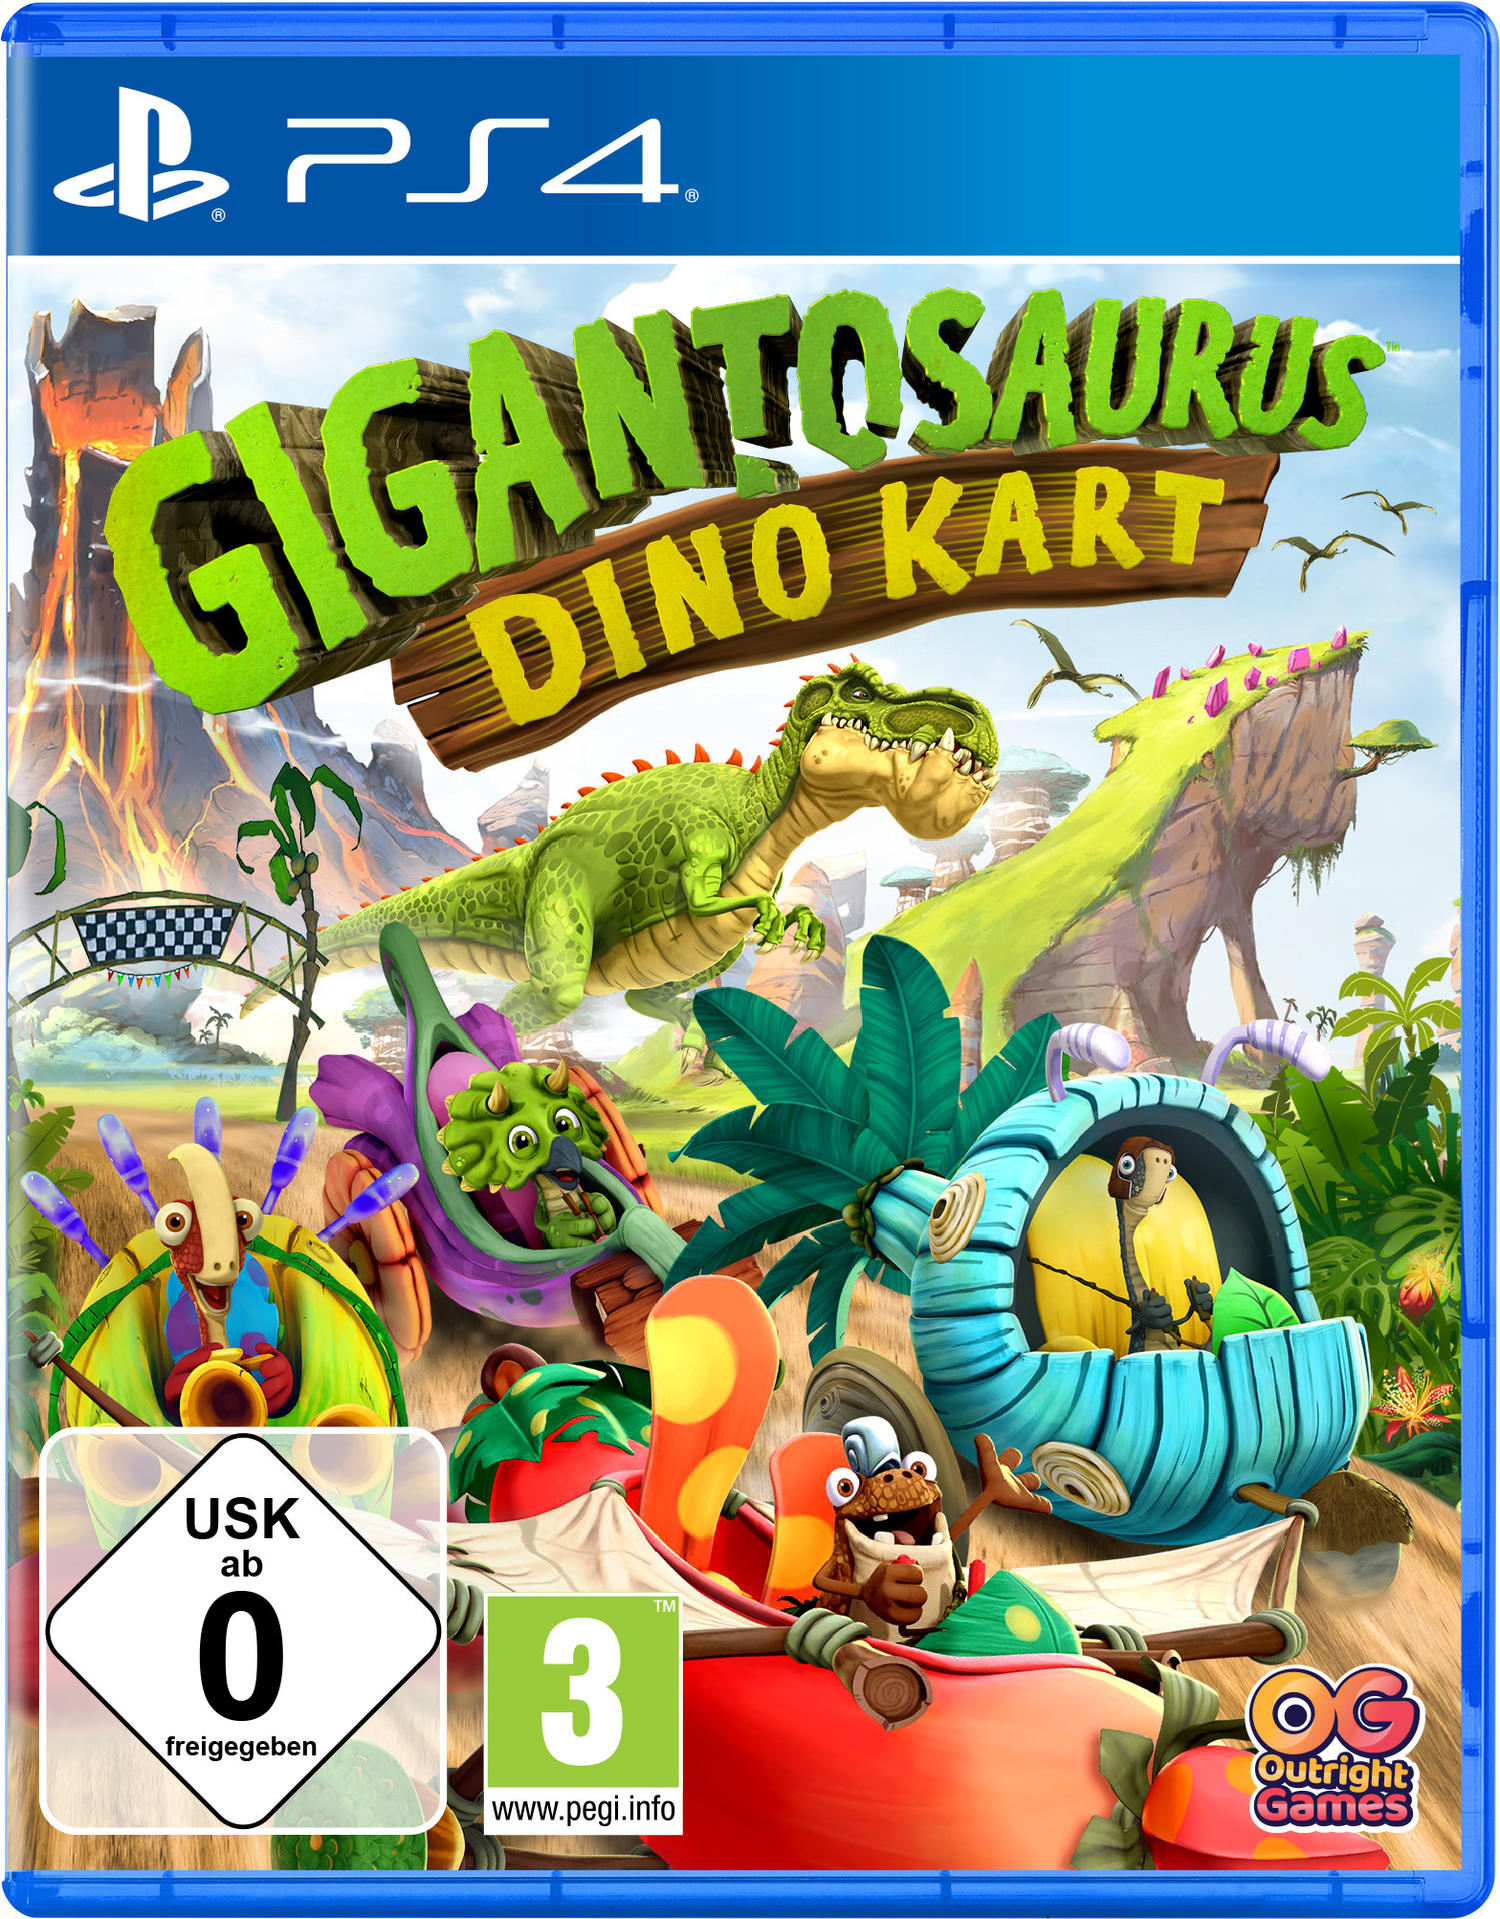 [PlayStation 4] Dino Kart - Gigantosaurus: